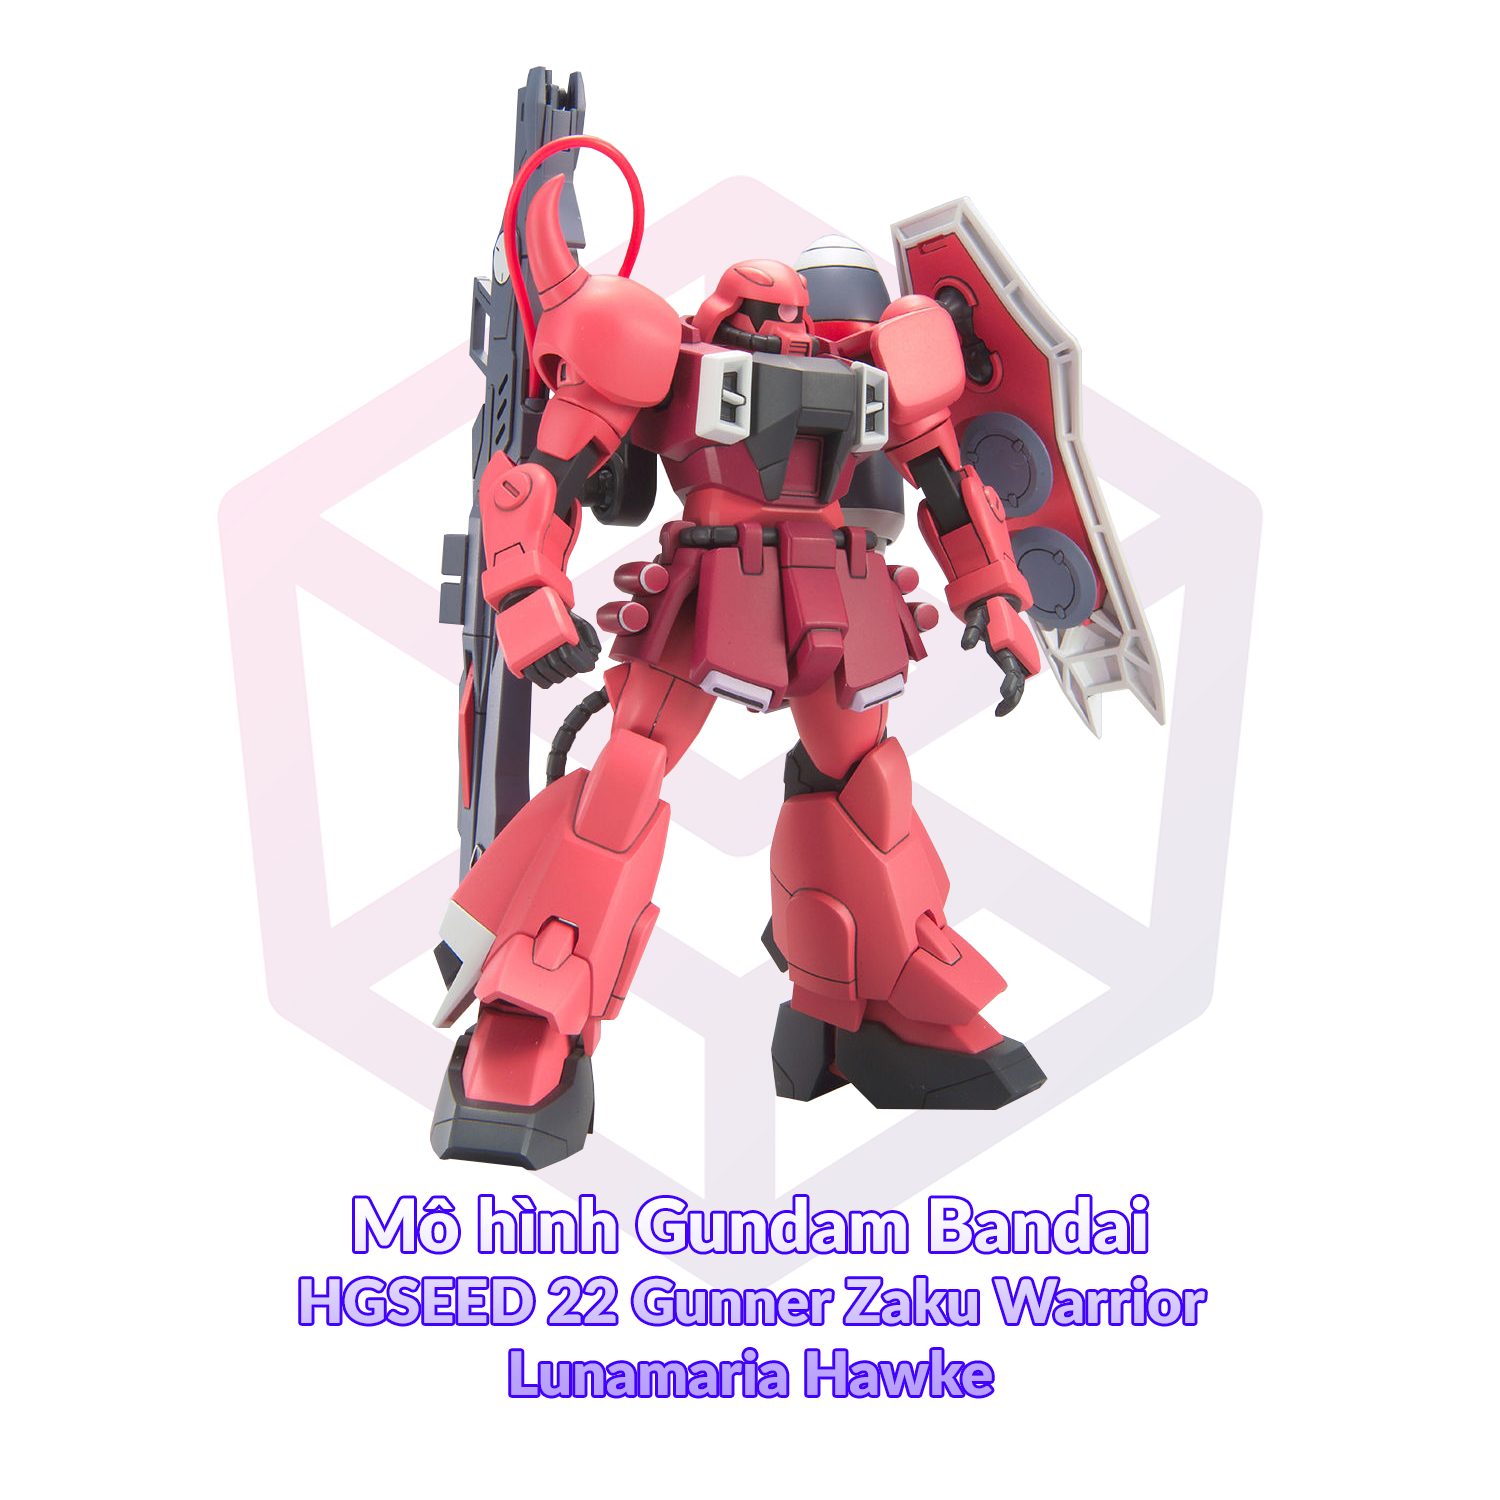 Mô hình Gundam Bandai HGSEED 22 Gunner Zaku Warrior Lunamaria Hawke 1 144